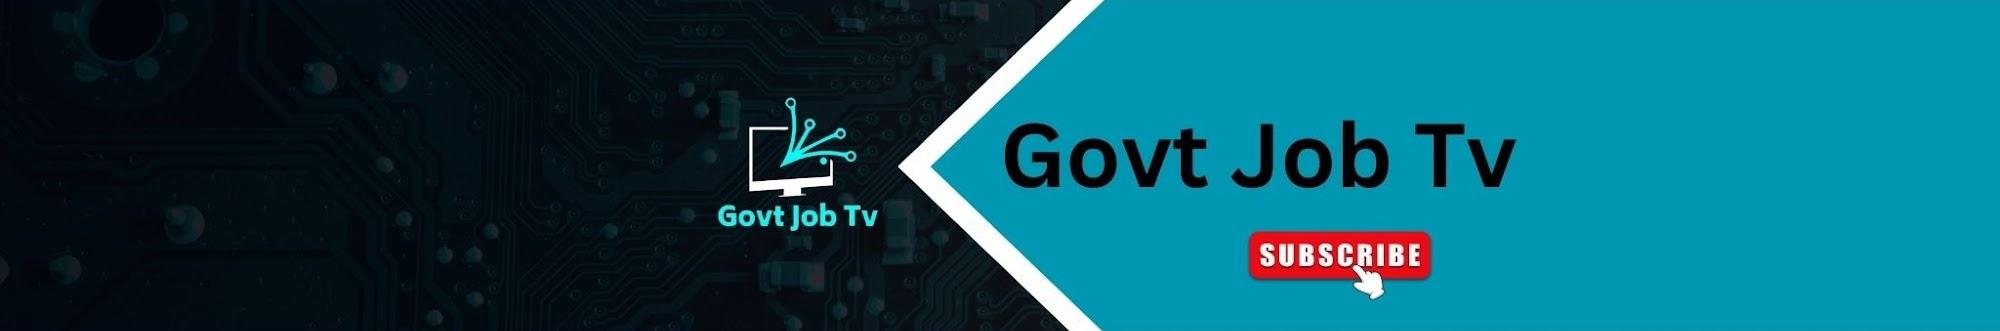 Govt Job Tv